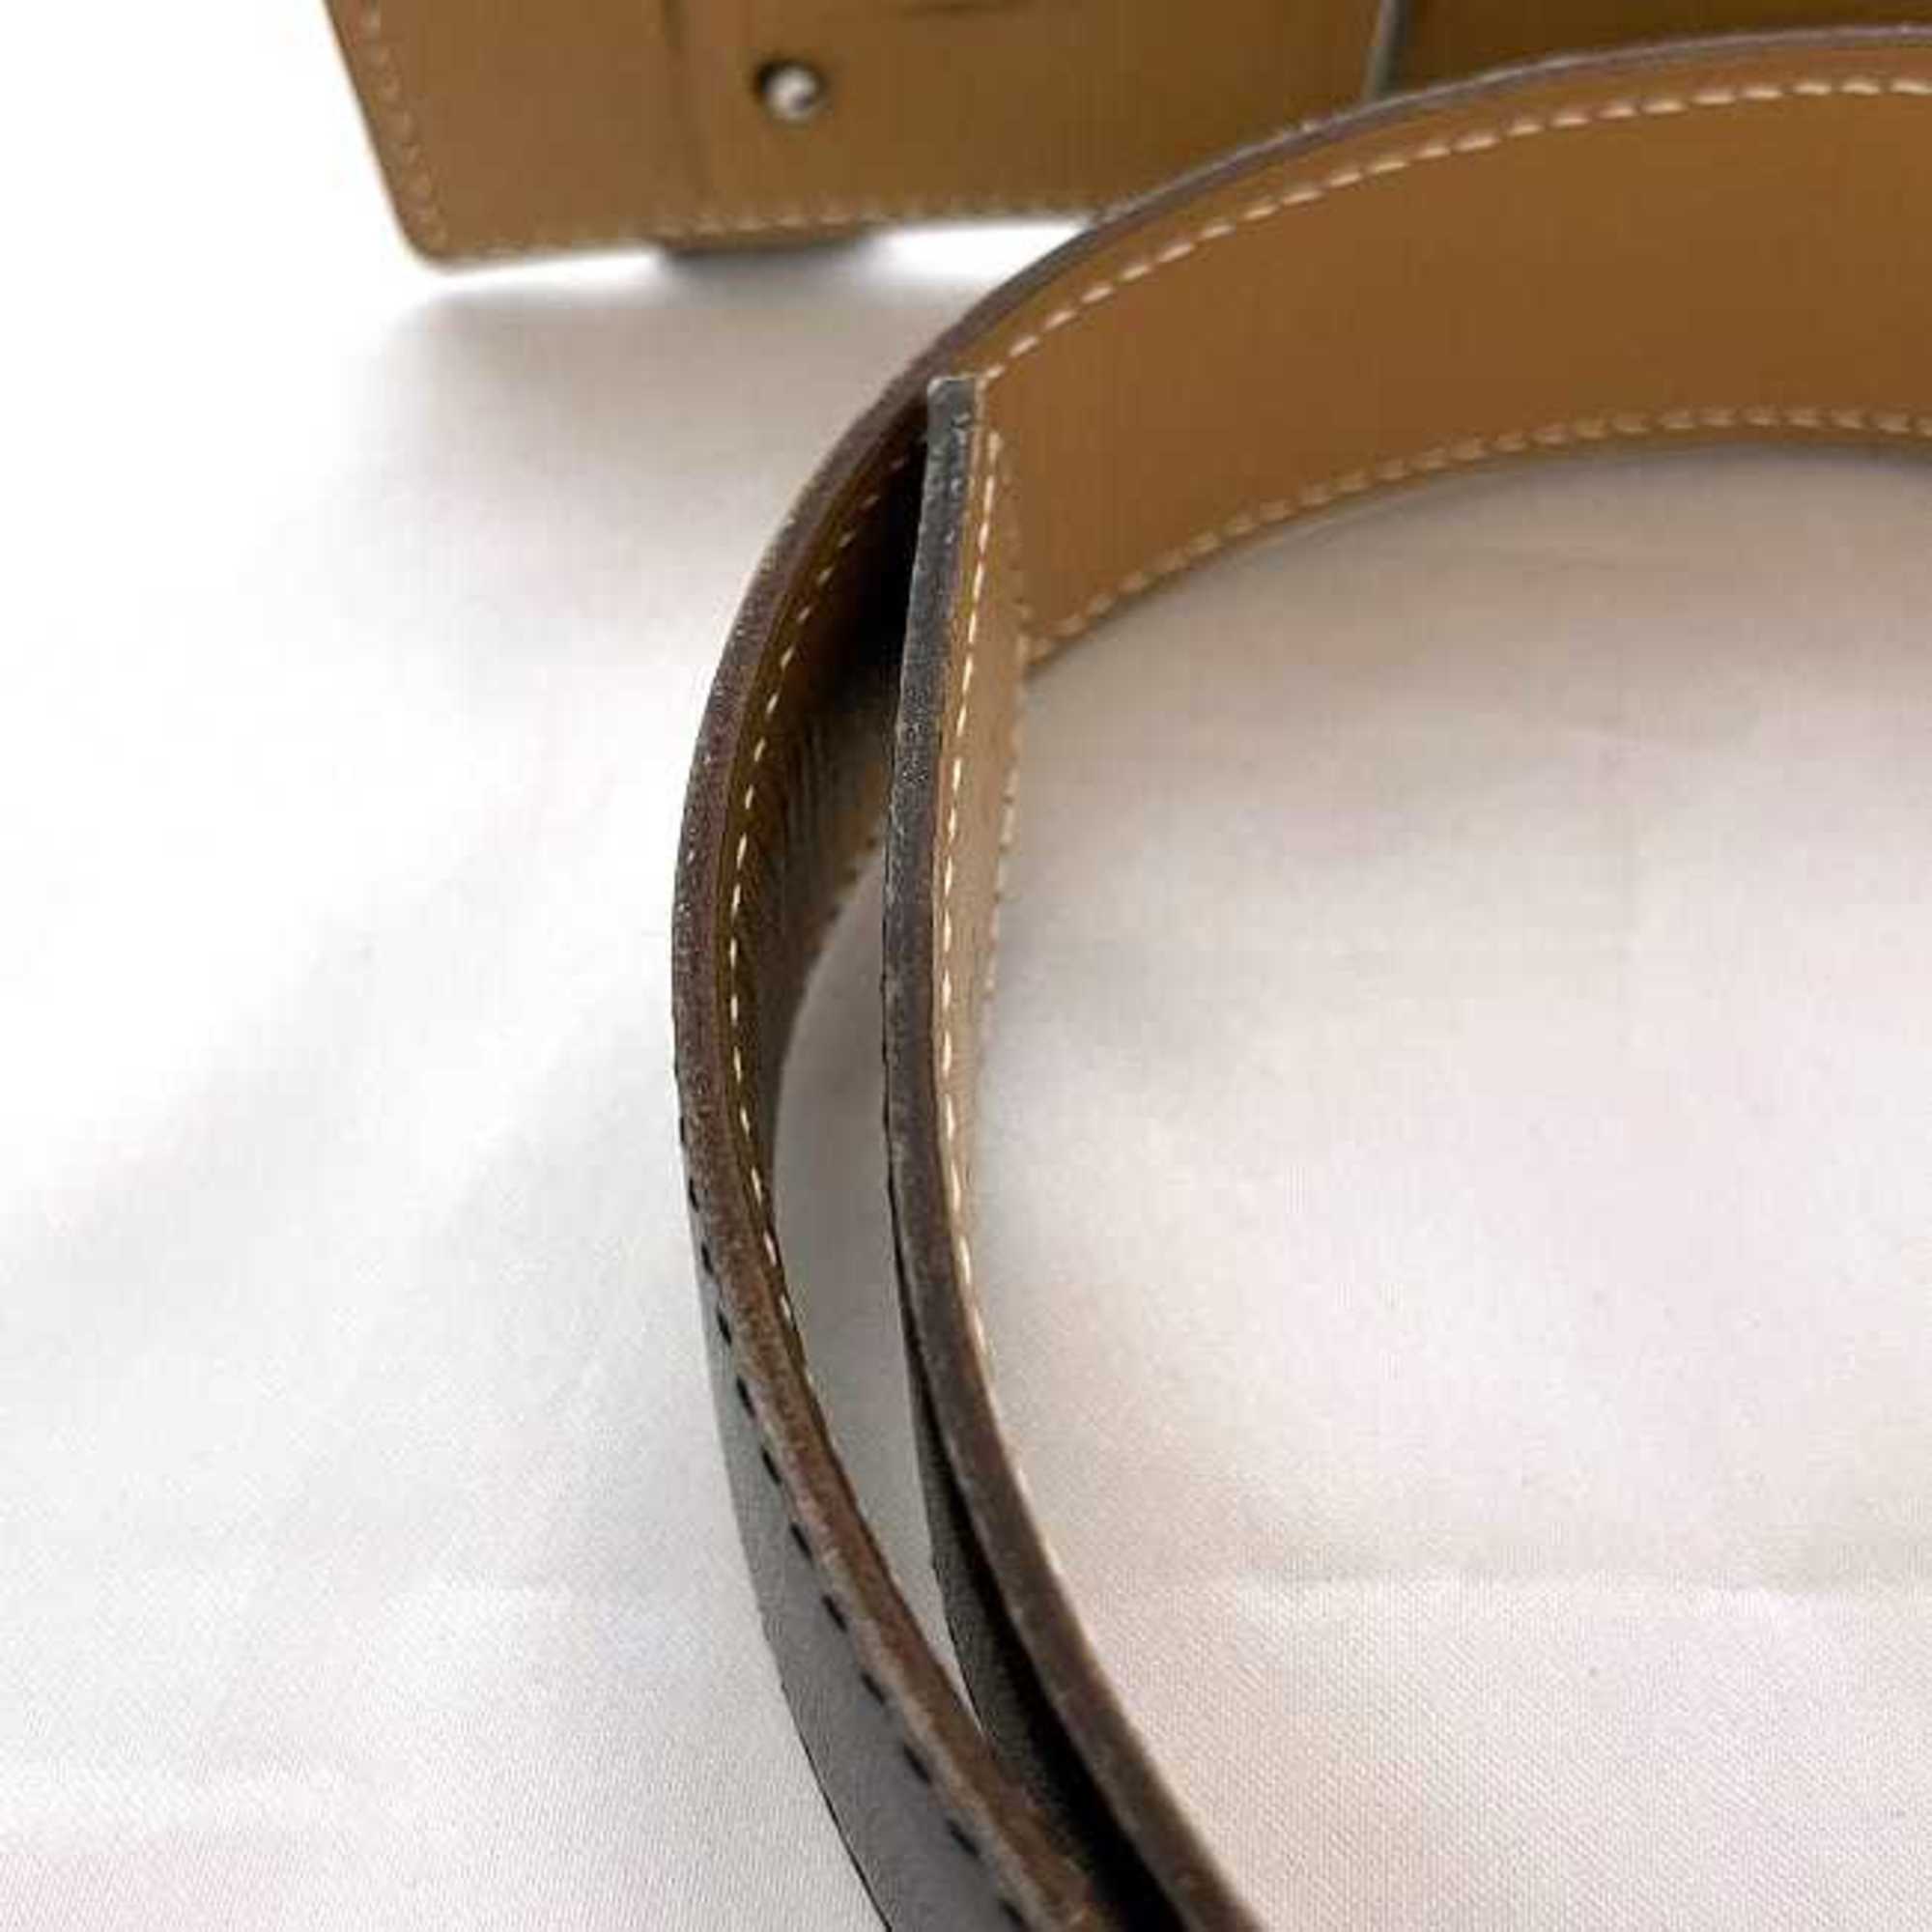 Hermes H-belt Black Camel Constance ec-19965 Waist belt Leather Box calf □G engraved HERMES Reversible 31mm Buckle Men's Women's Brown 70cm Made in 2003